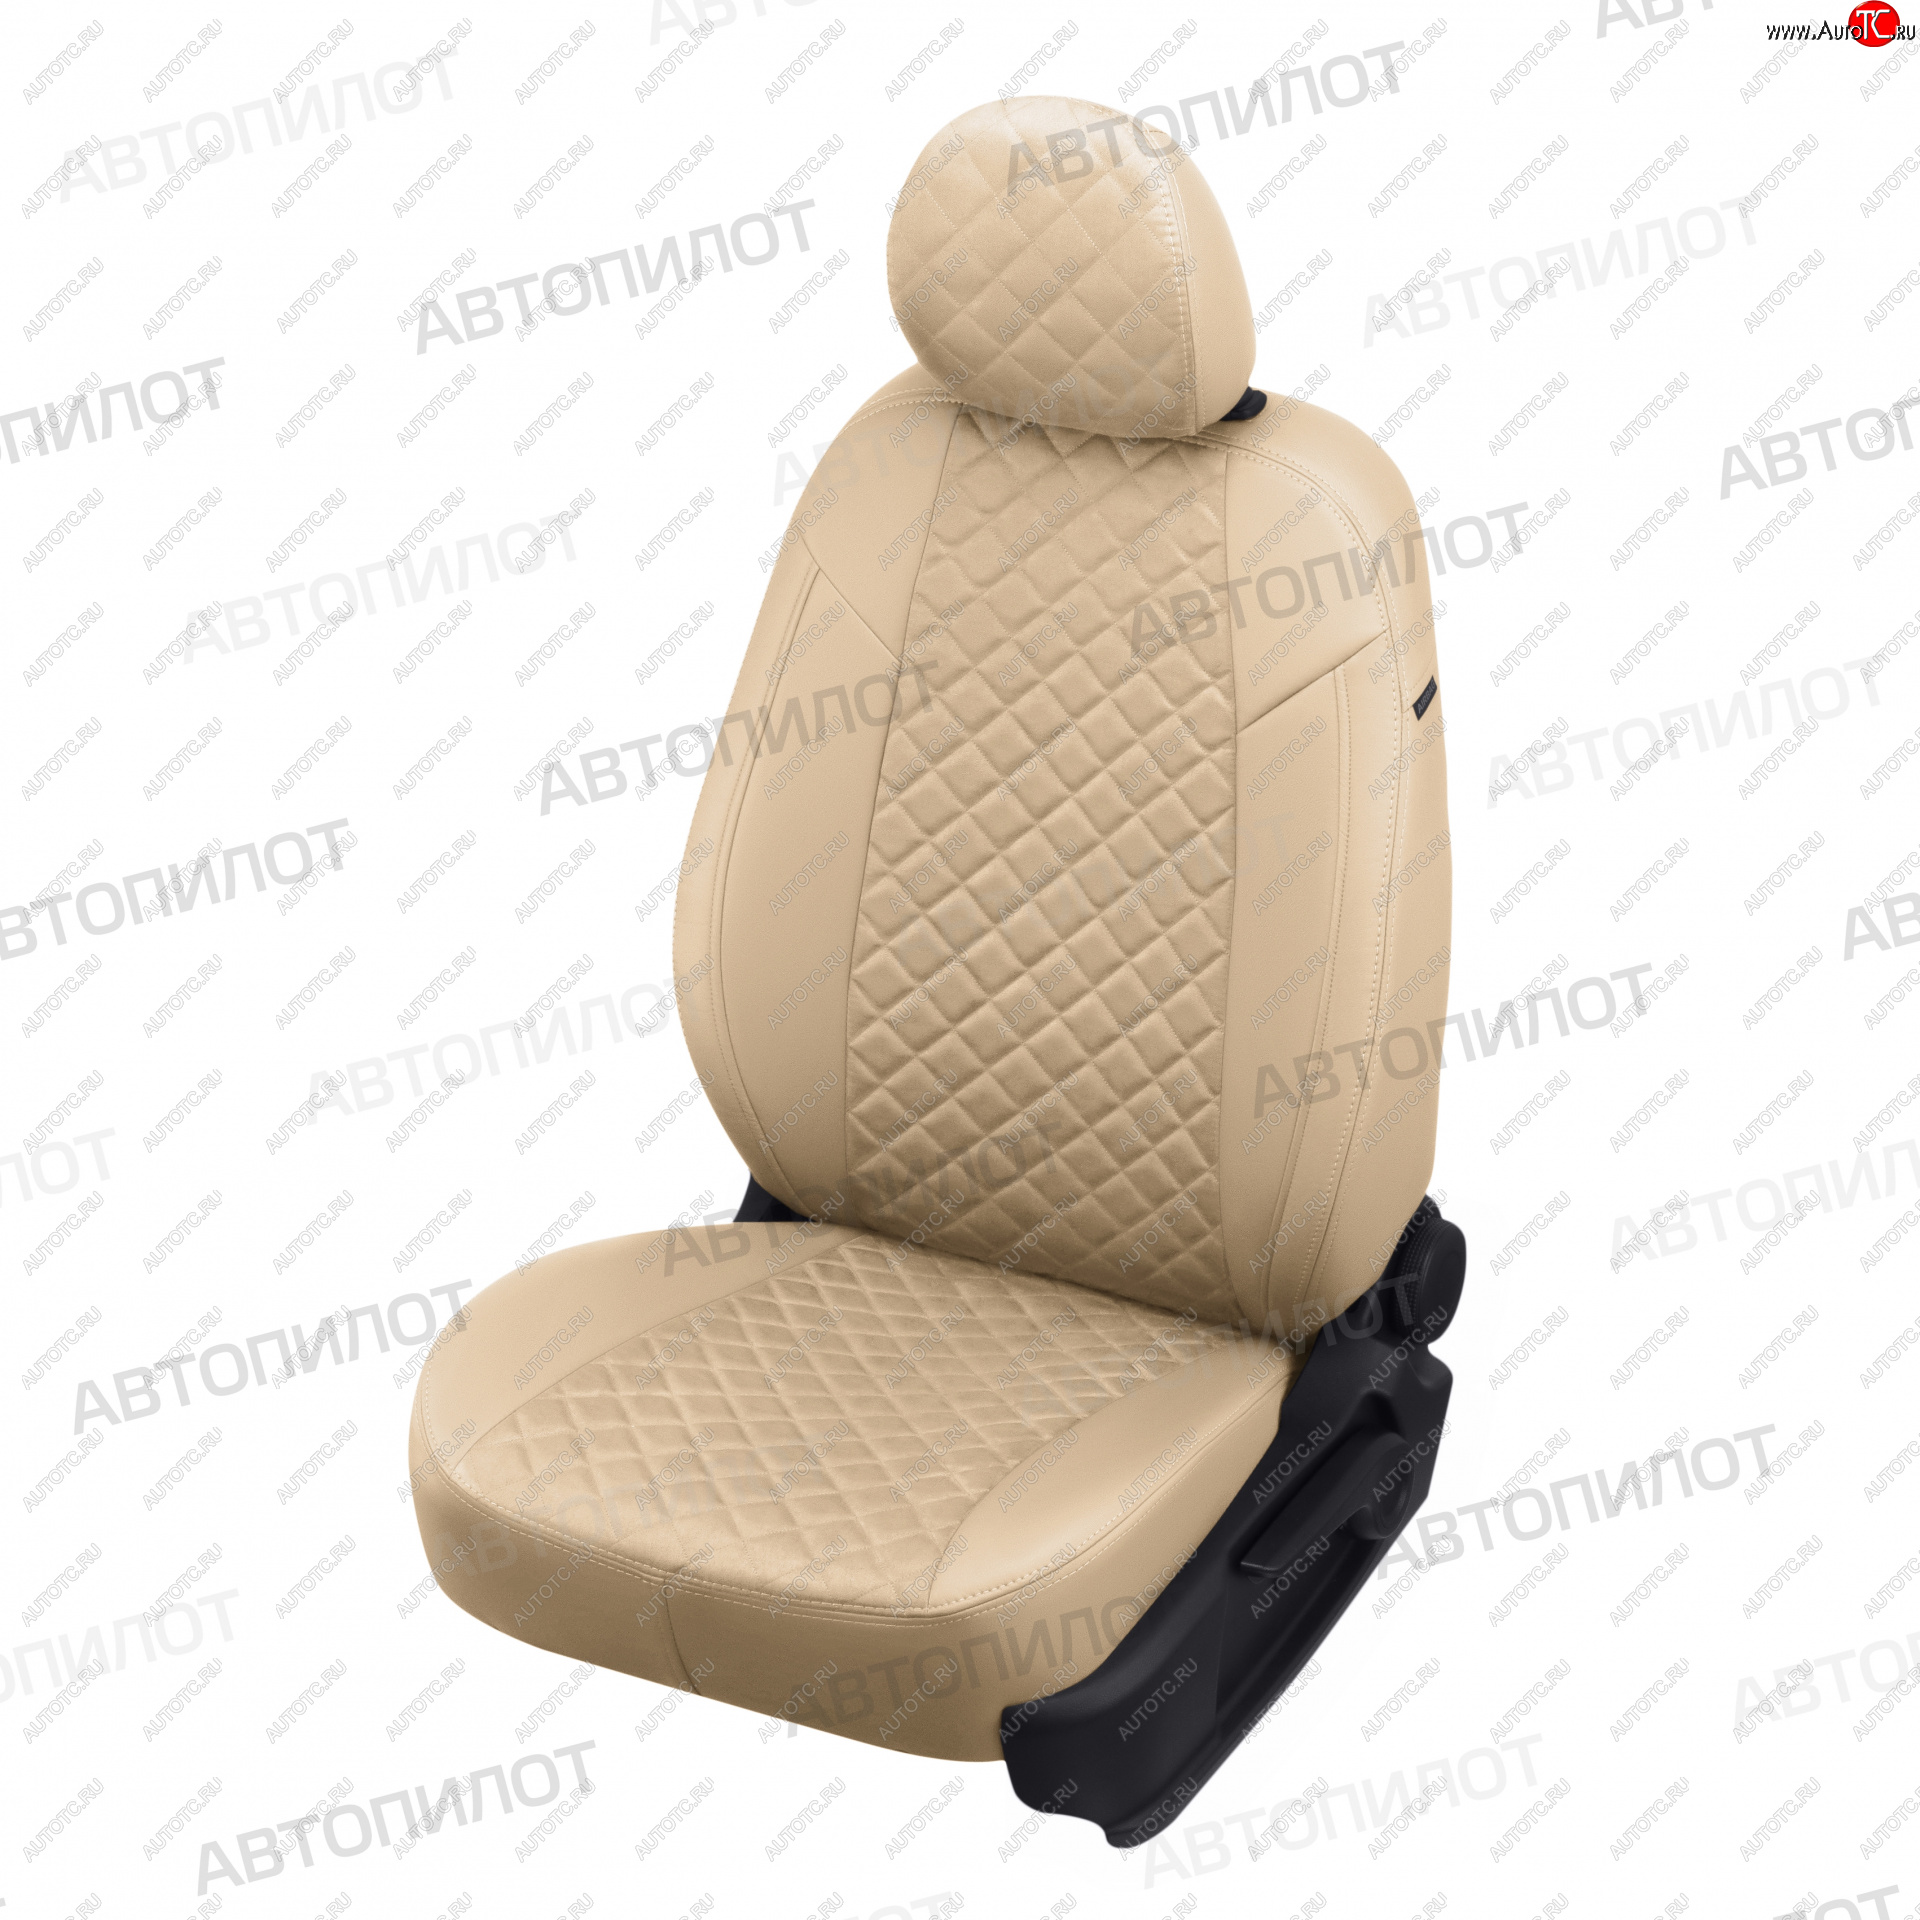 13 999 р. Чехлы сидений (экокожа/алькантара) Автопилот Ромб  Land Rover Discovery Sport  L550 (2014-2019) (бежевый)